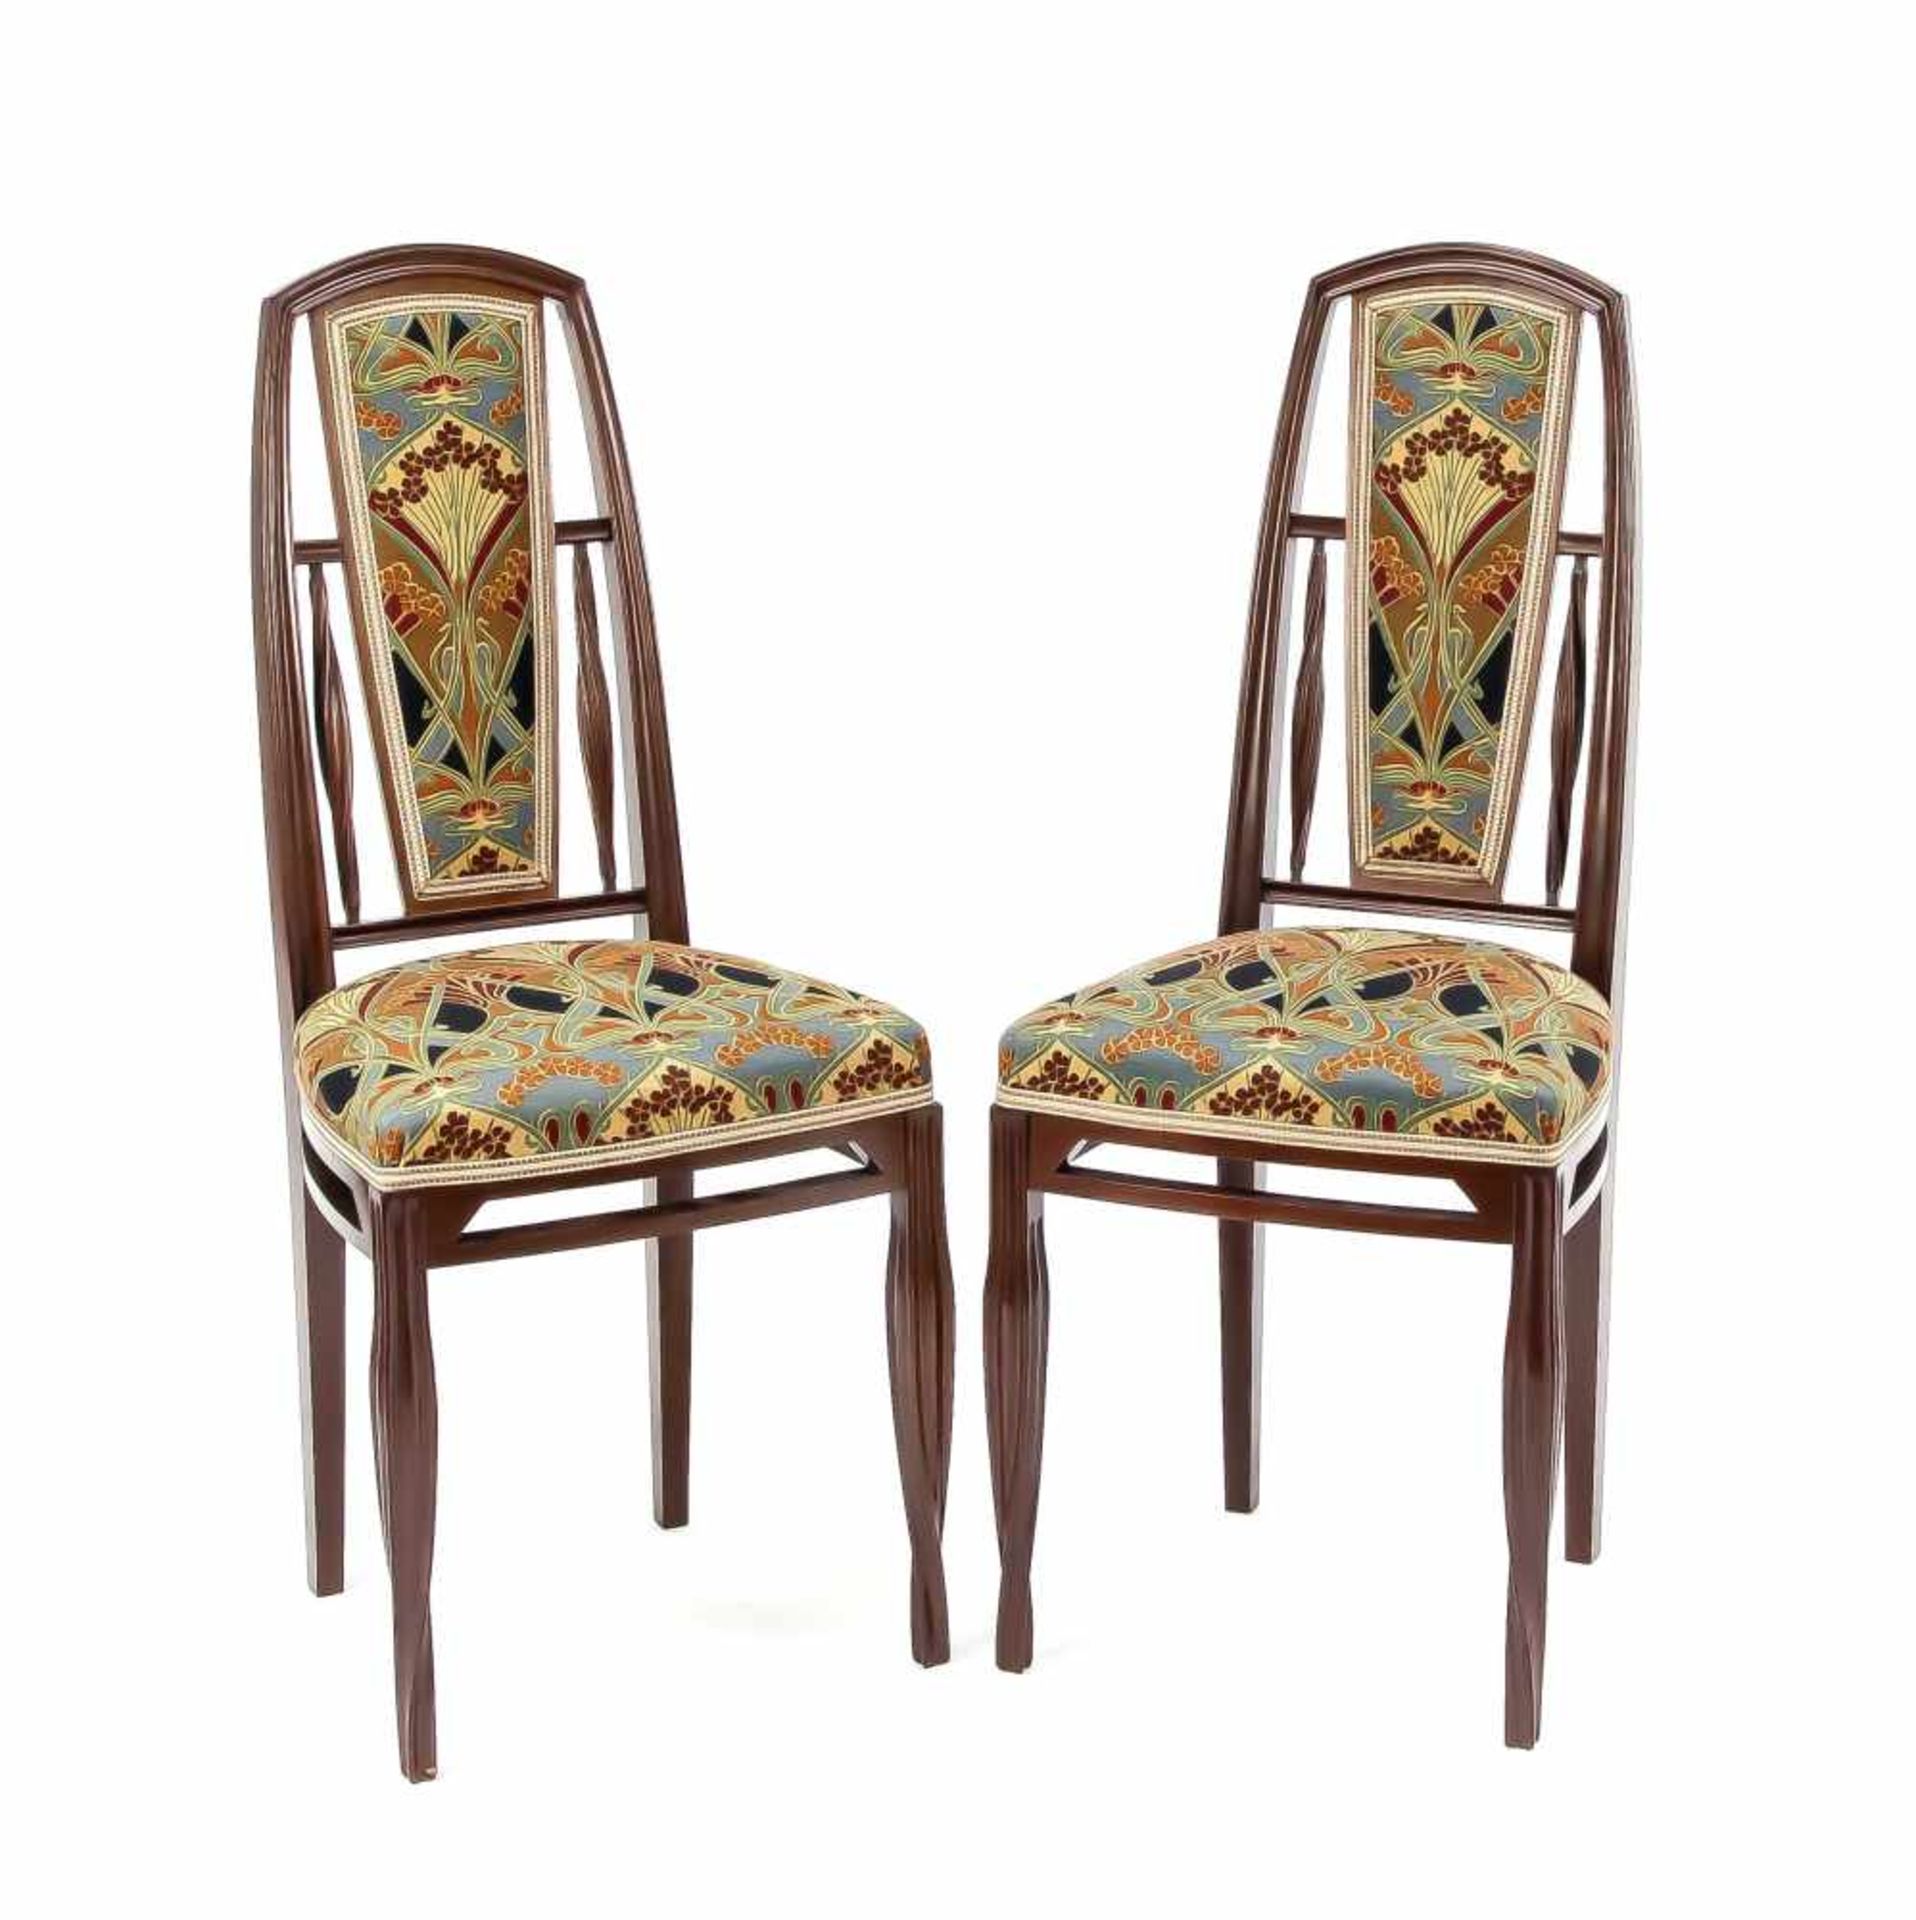 Paar Jugendstil-Stühle. Entwurf wohl Henry van de Velde (1863-1957). Nussbaum massiv,organisch